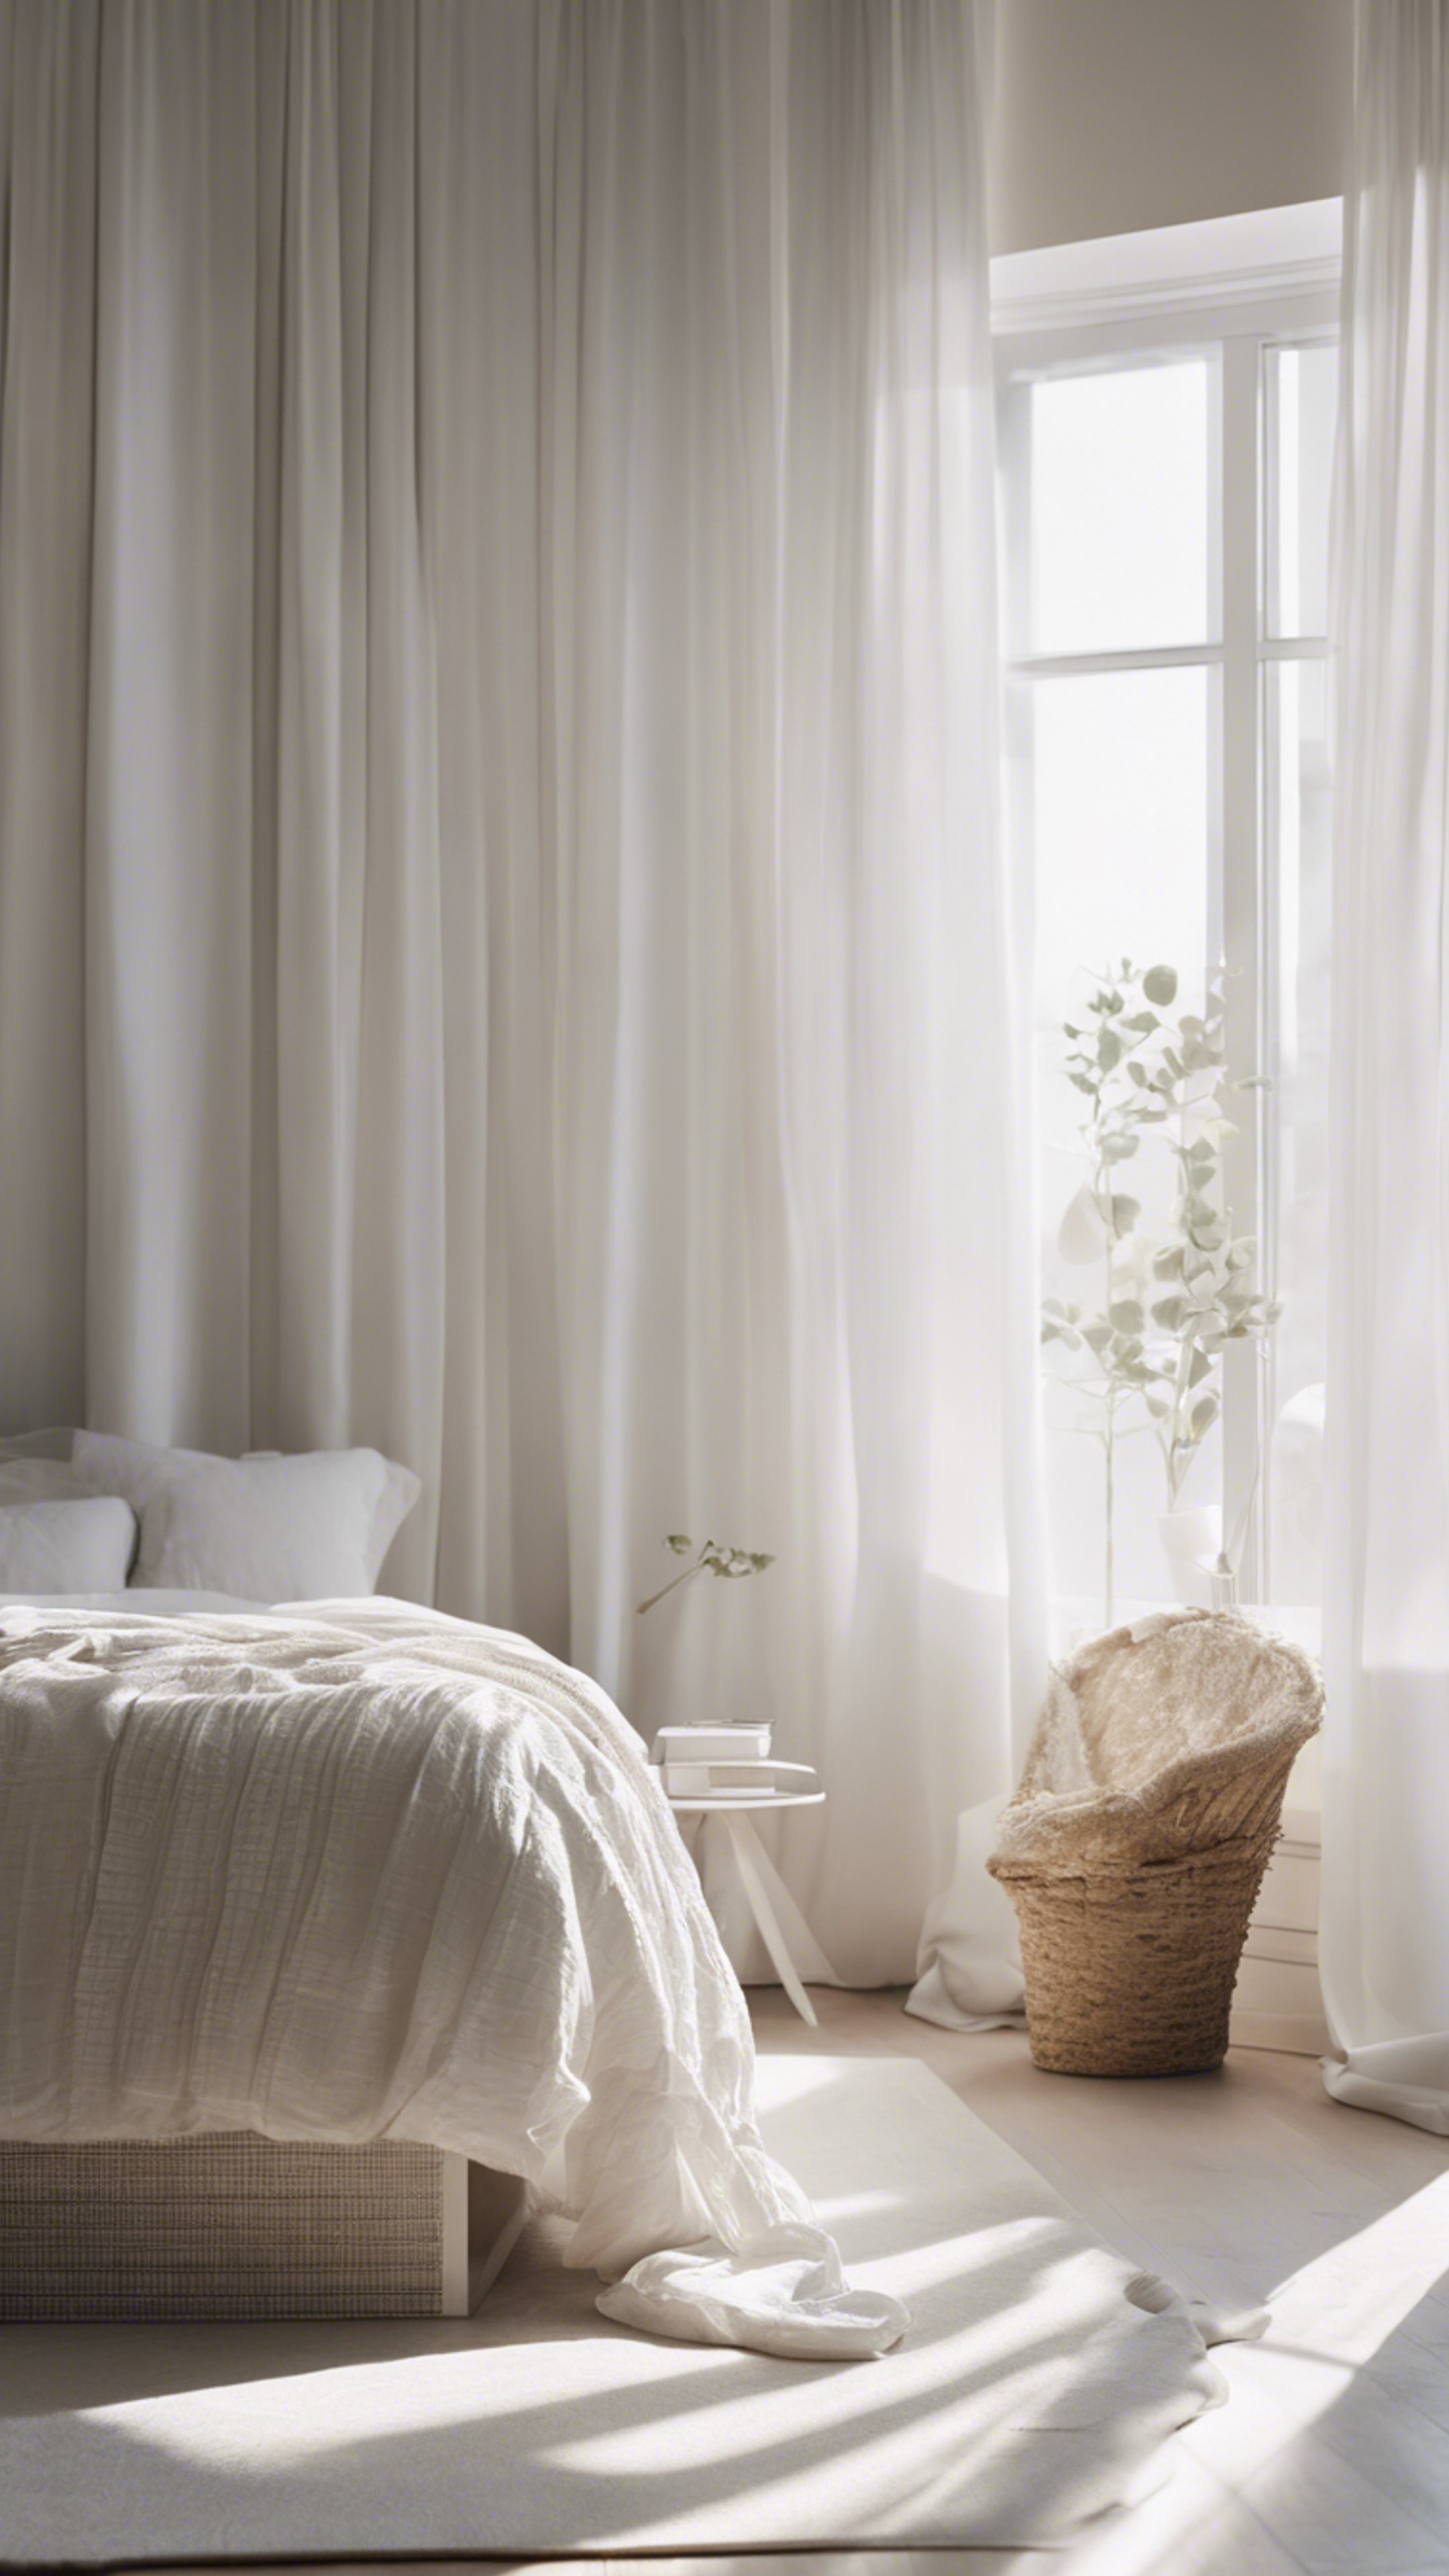 A serene white bedroom with a minimalist aesthetic, sunlight streaming through sheer curtains Sfondo[e50a9fa27884450ea562]